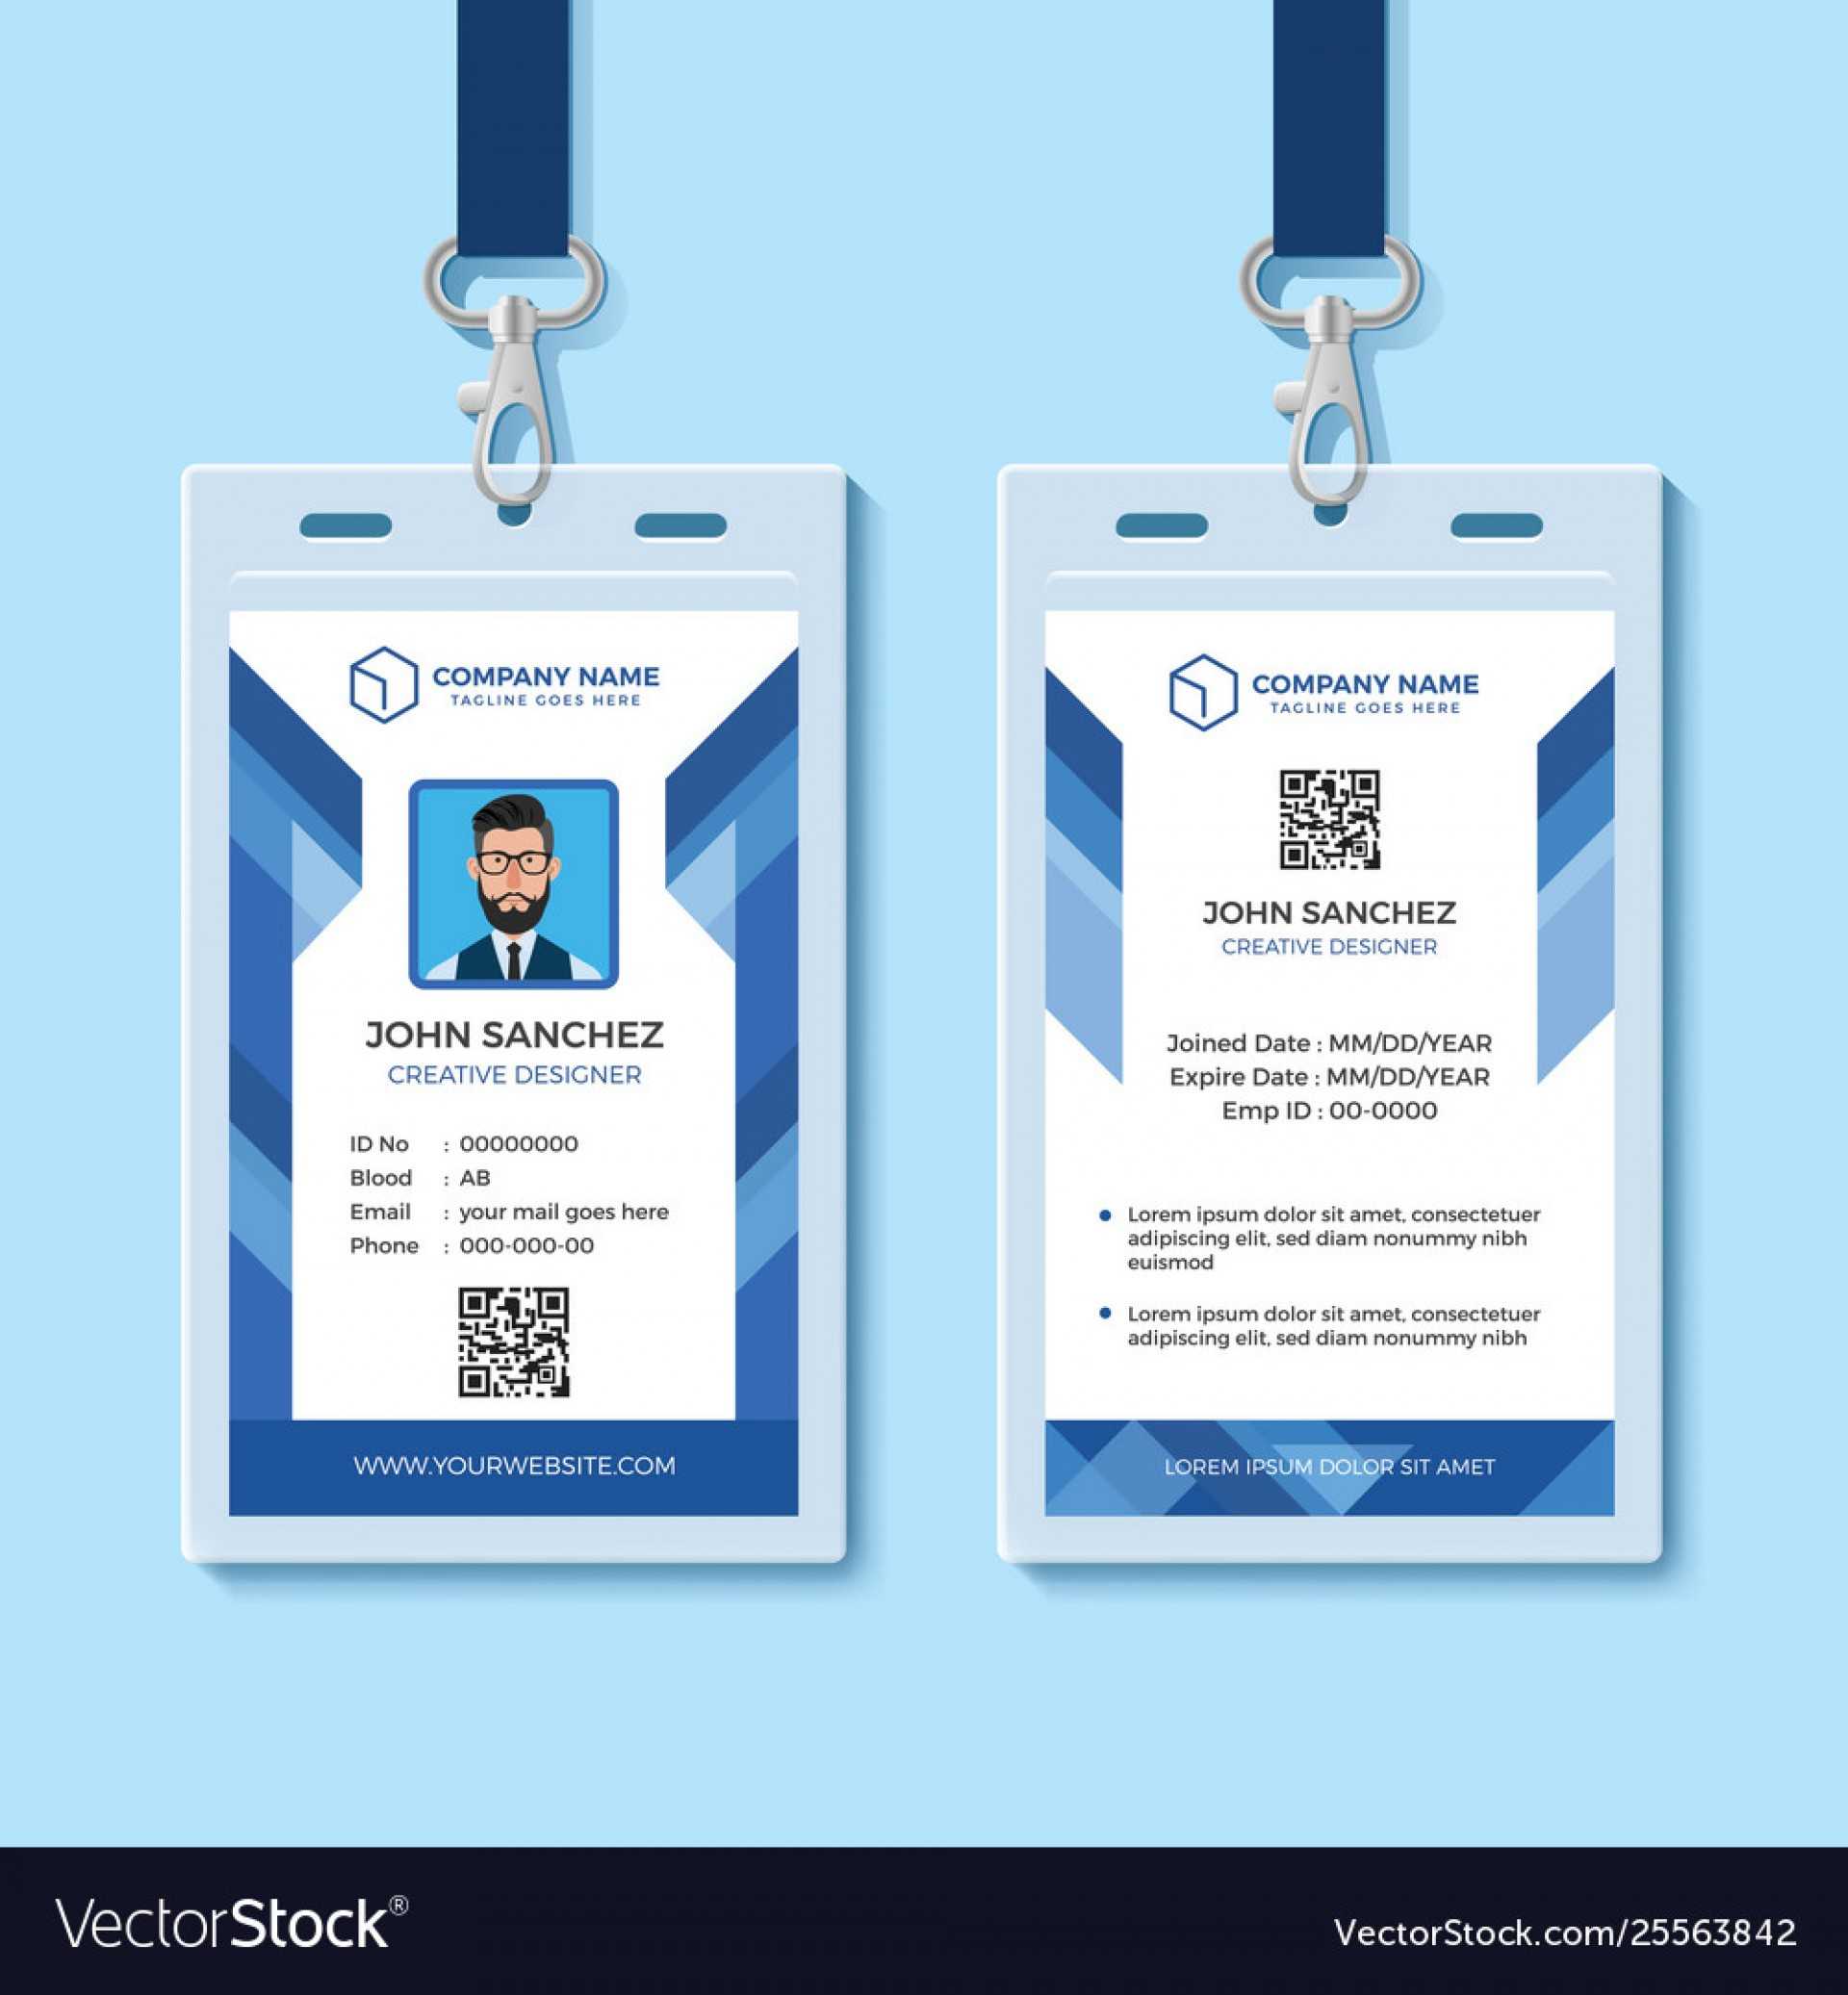 042 Template Ideas Employee Id Card Templates Blue Design Inside Free Id Card Template Word